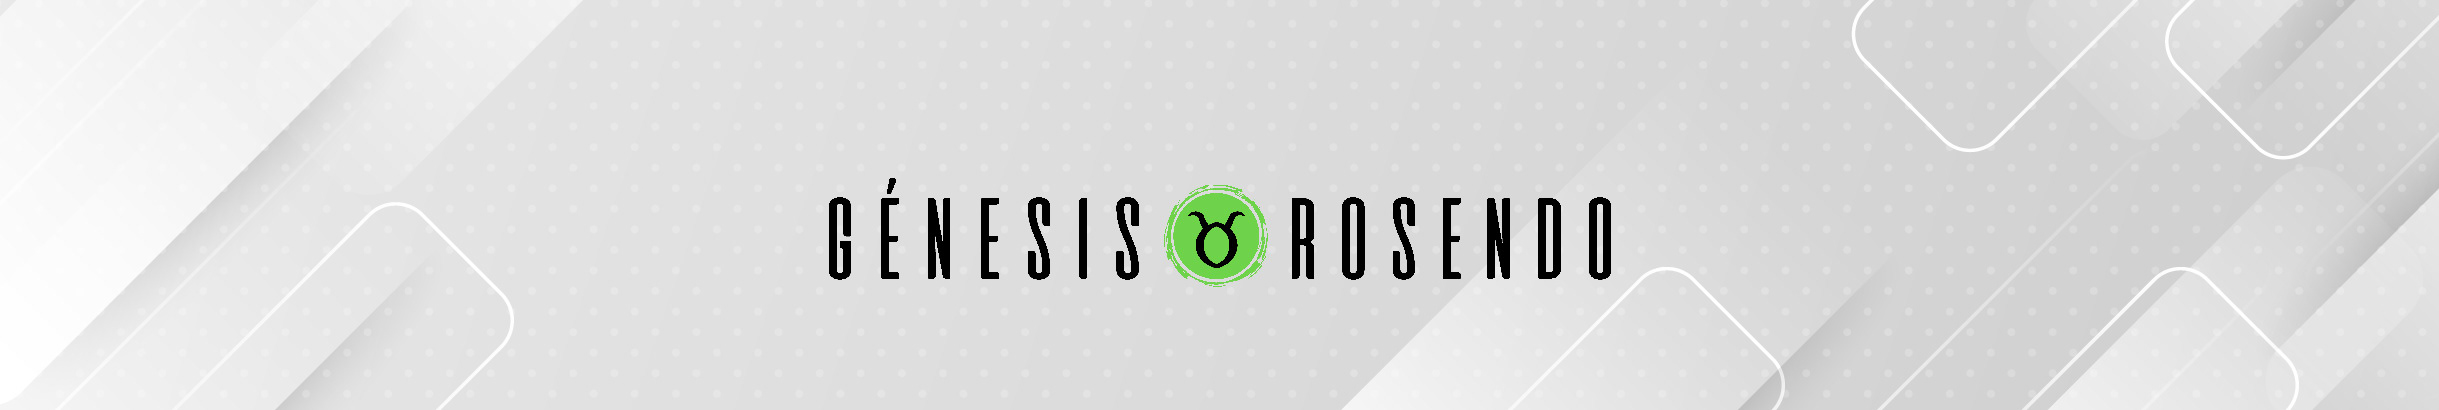 Genesis Rosendos profilbanner